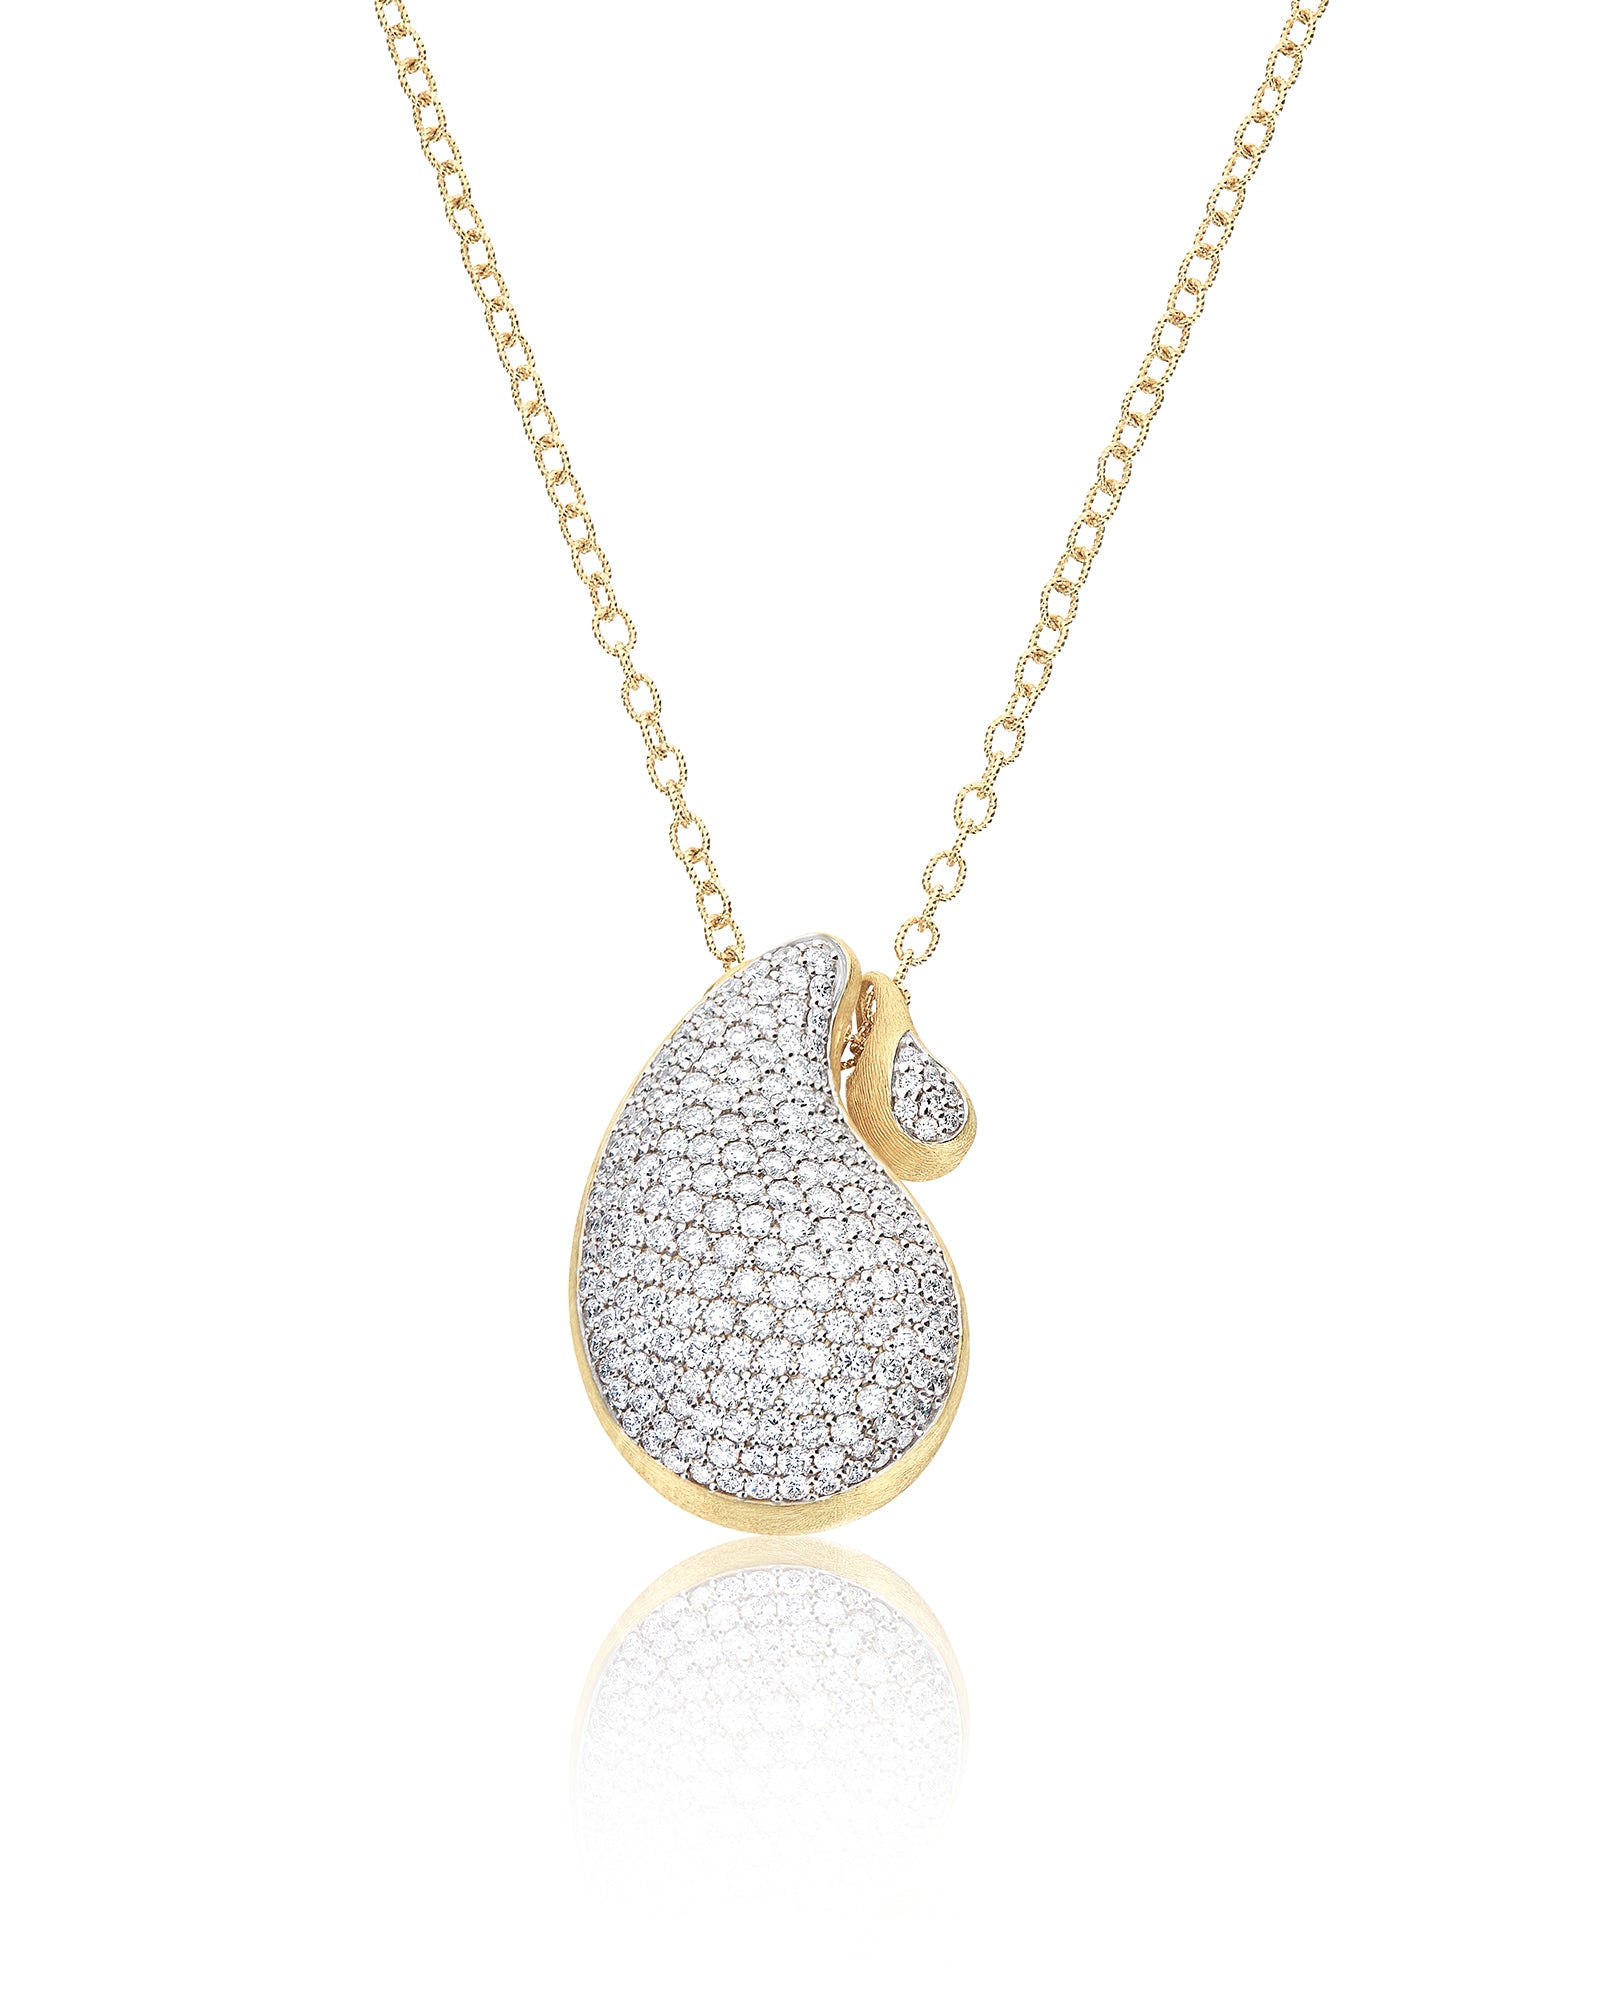 "Trasformista" Gold, Cachemire and Diamonds necklace